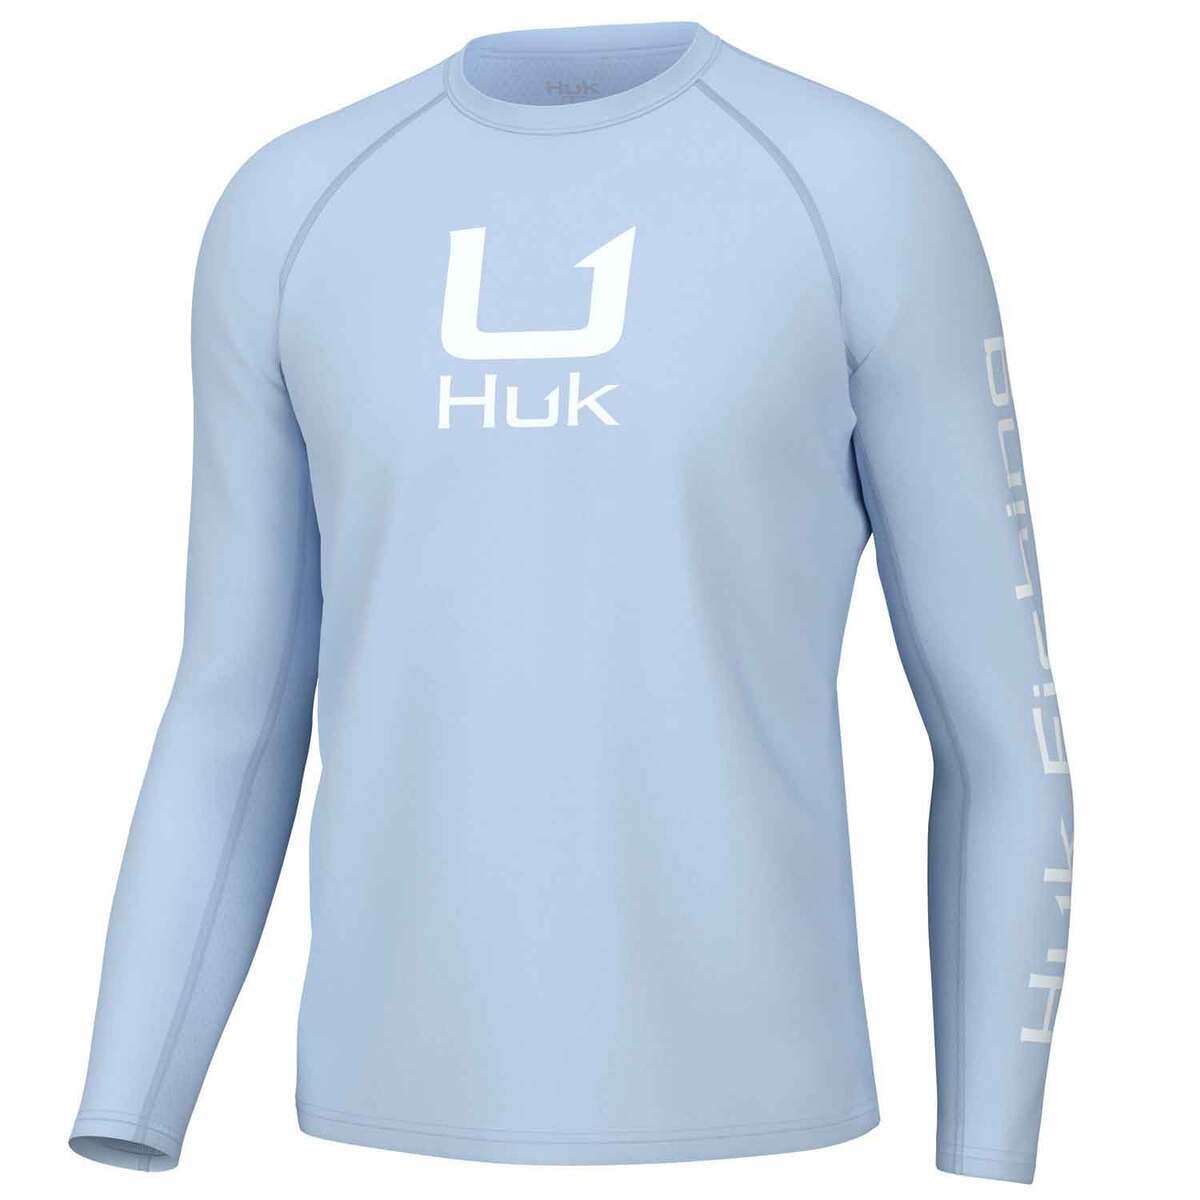 Huk Men's Icon Crew Long Sleeve Fishing Shirt - Ice Water - XL